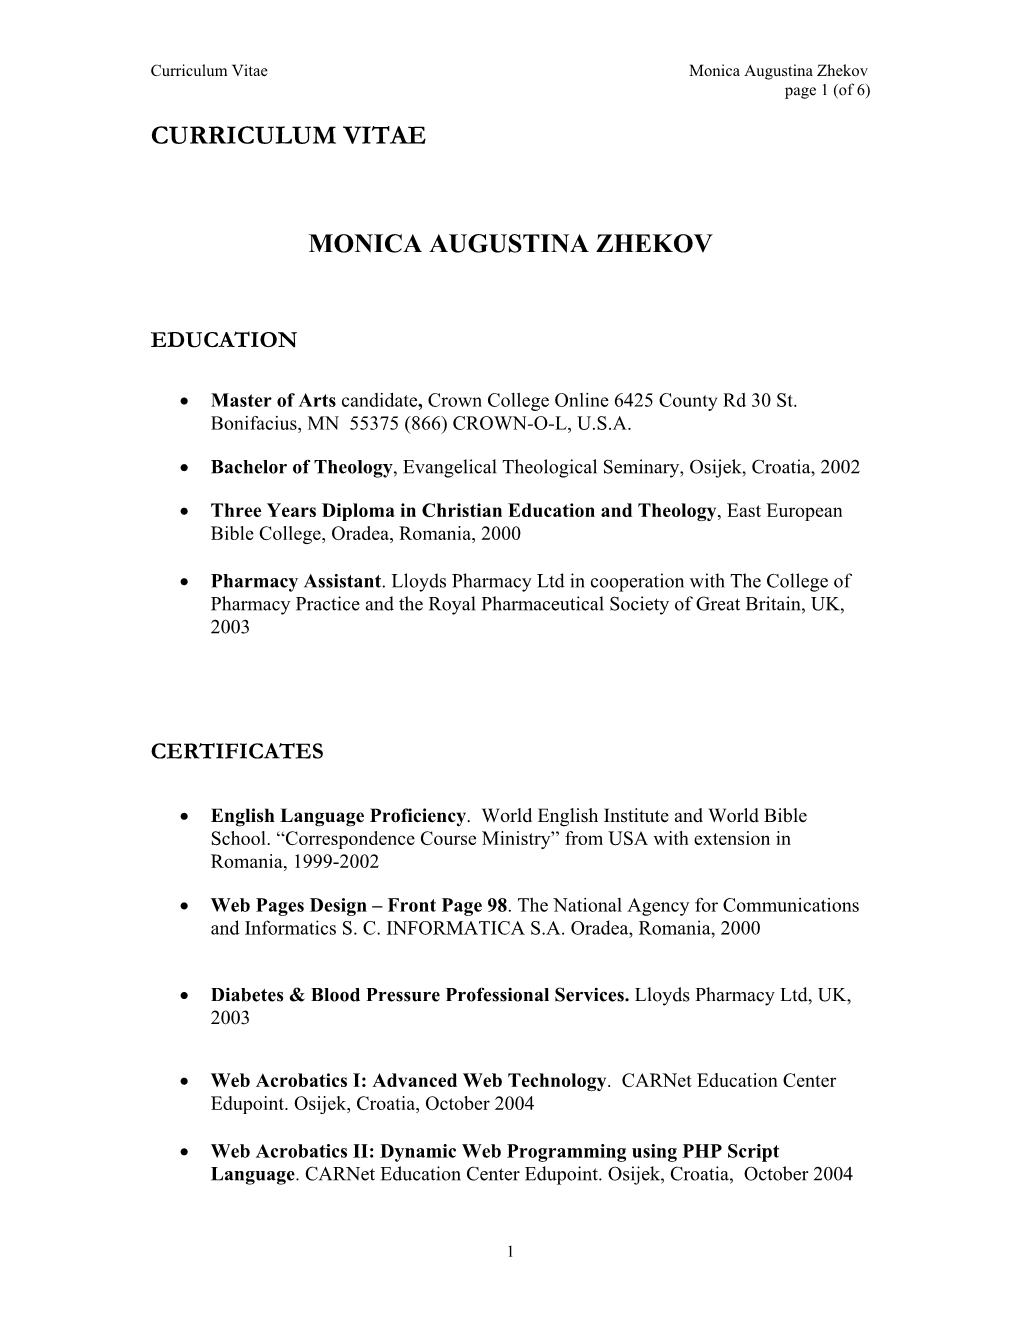 Curriculum Vitae Monica Augustina Zhekov Page 1 (Of 6)